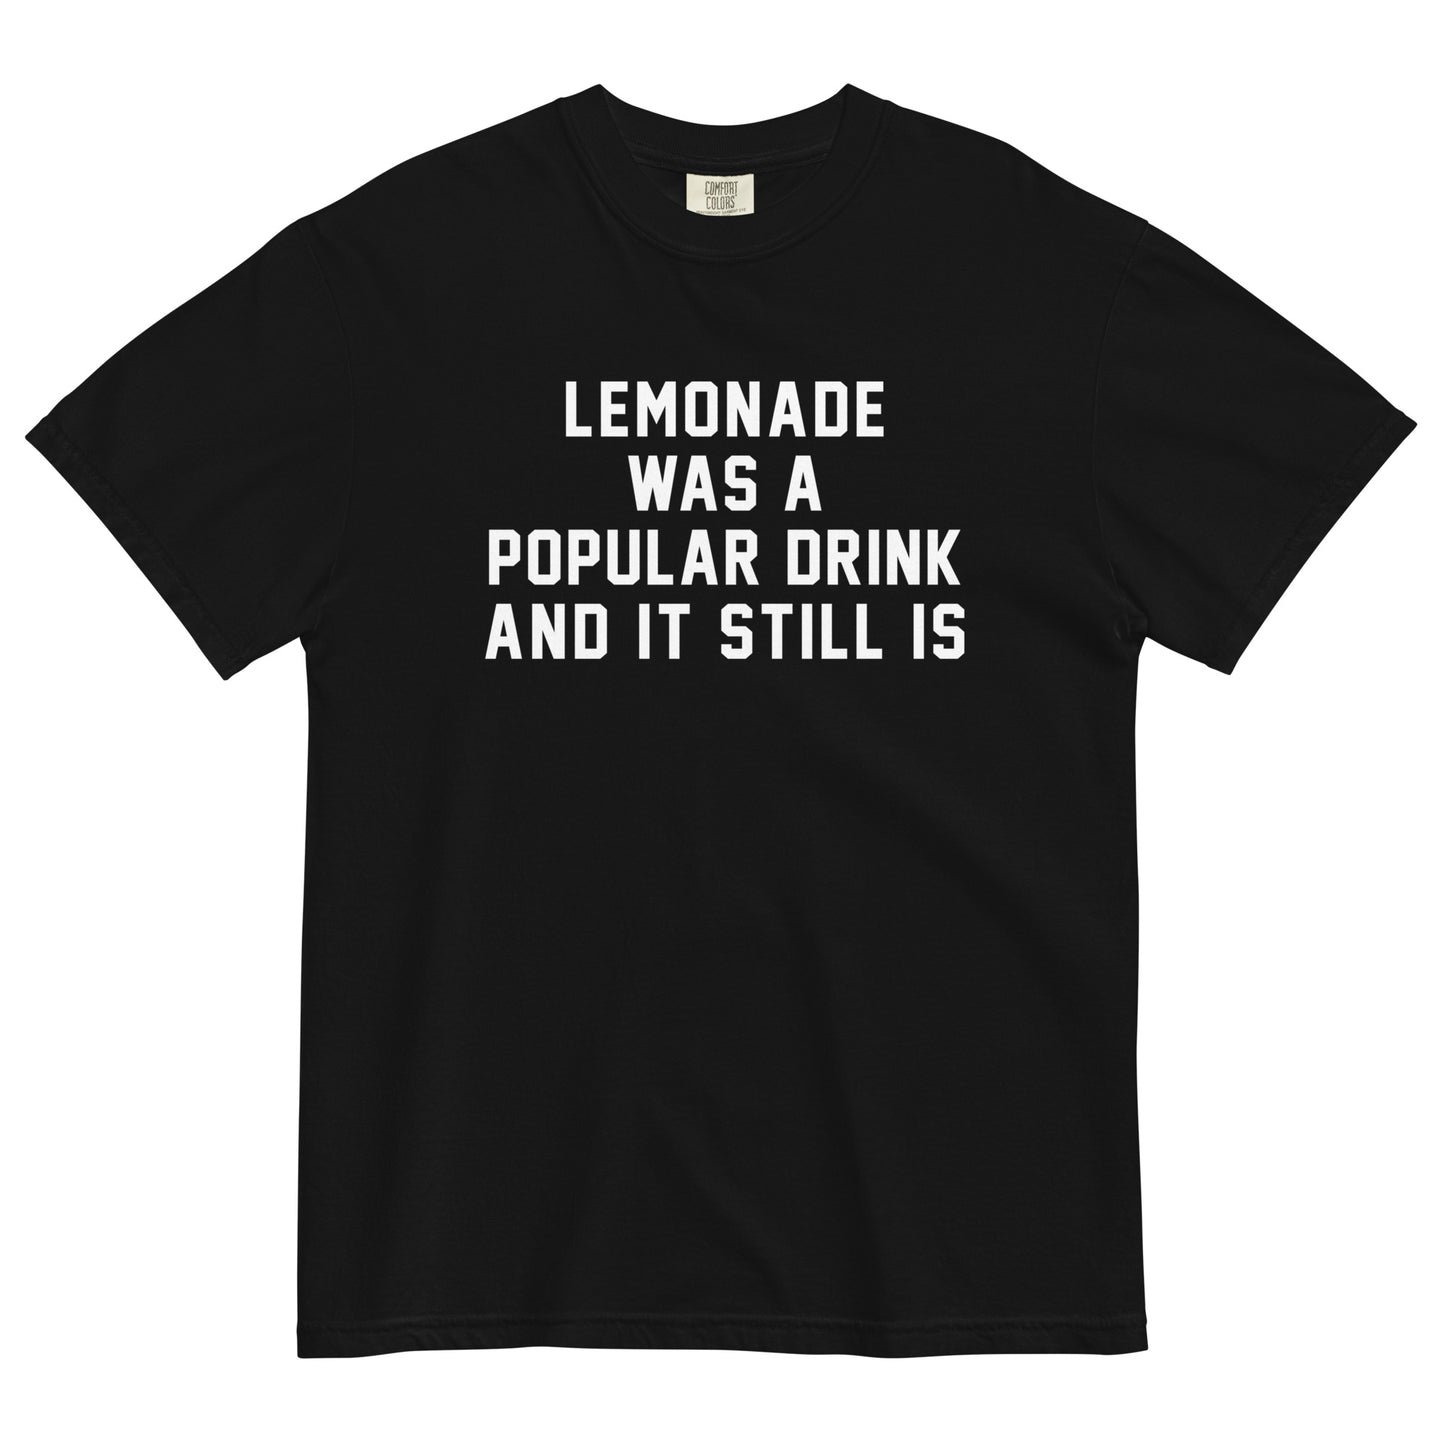 LEMONADE WAS A POPULAR DRINK AND IT STILL IS